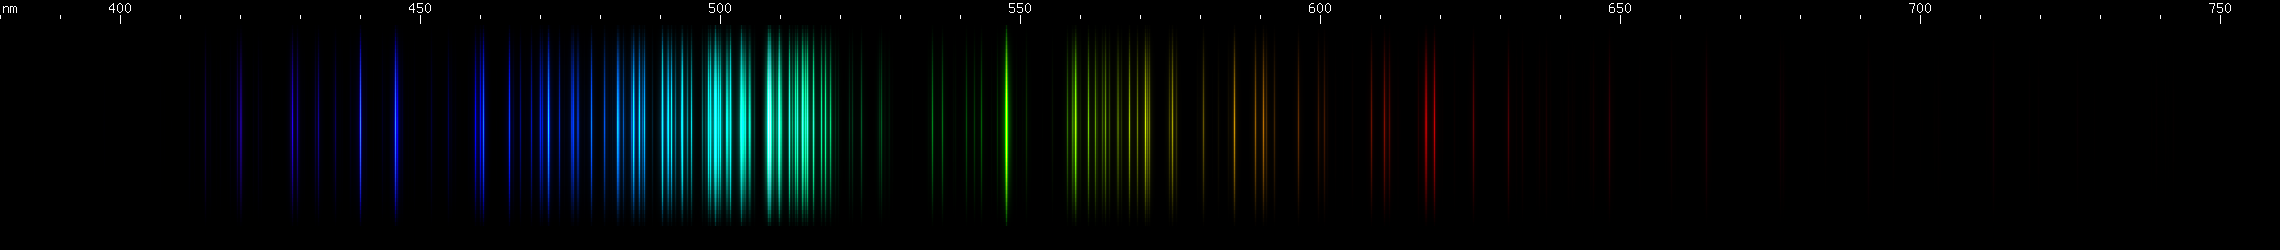 Spectral lines of Nickel.